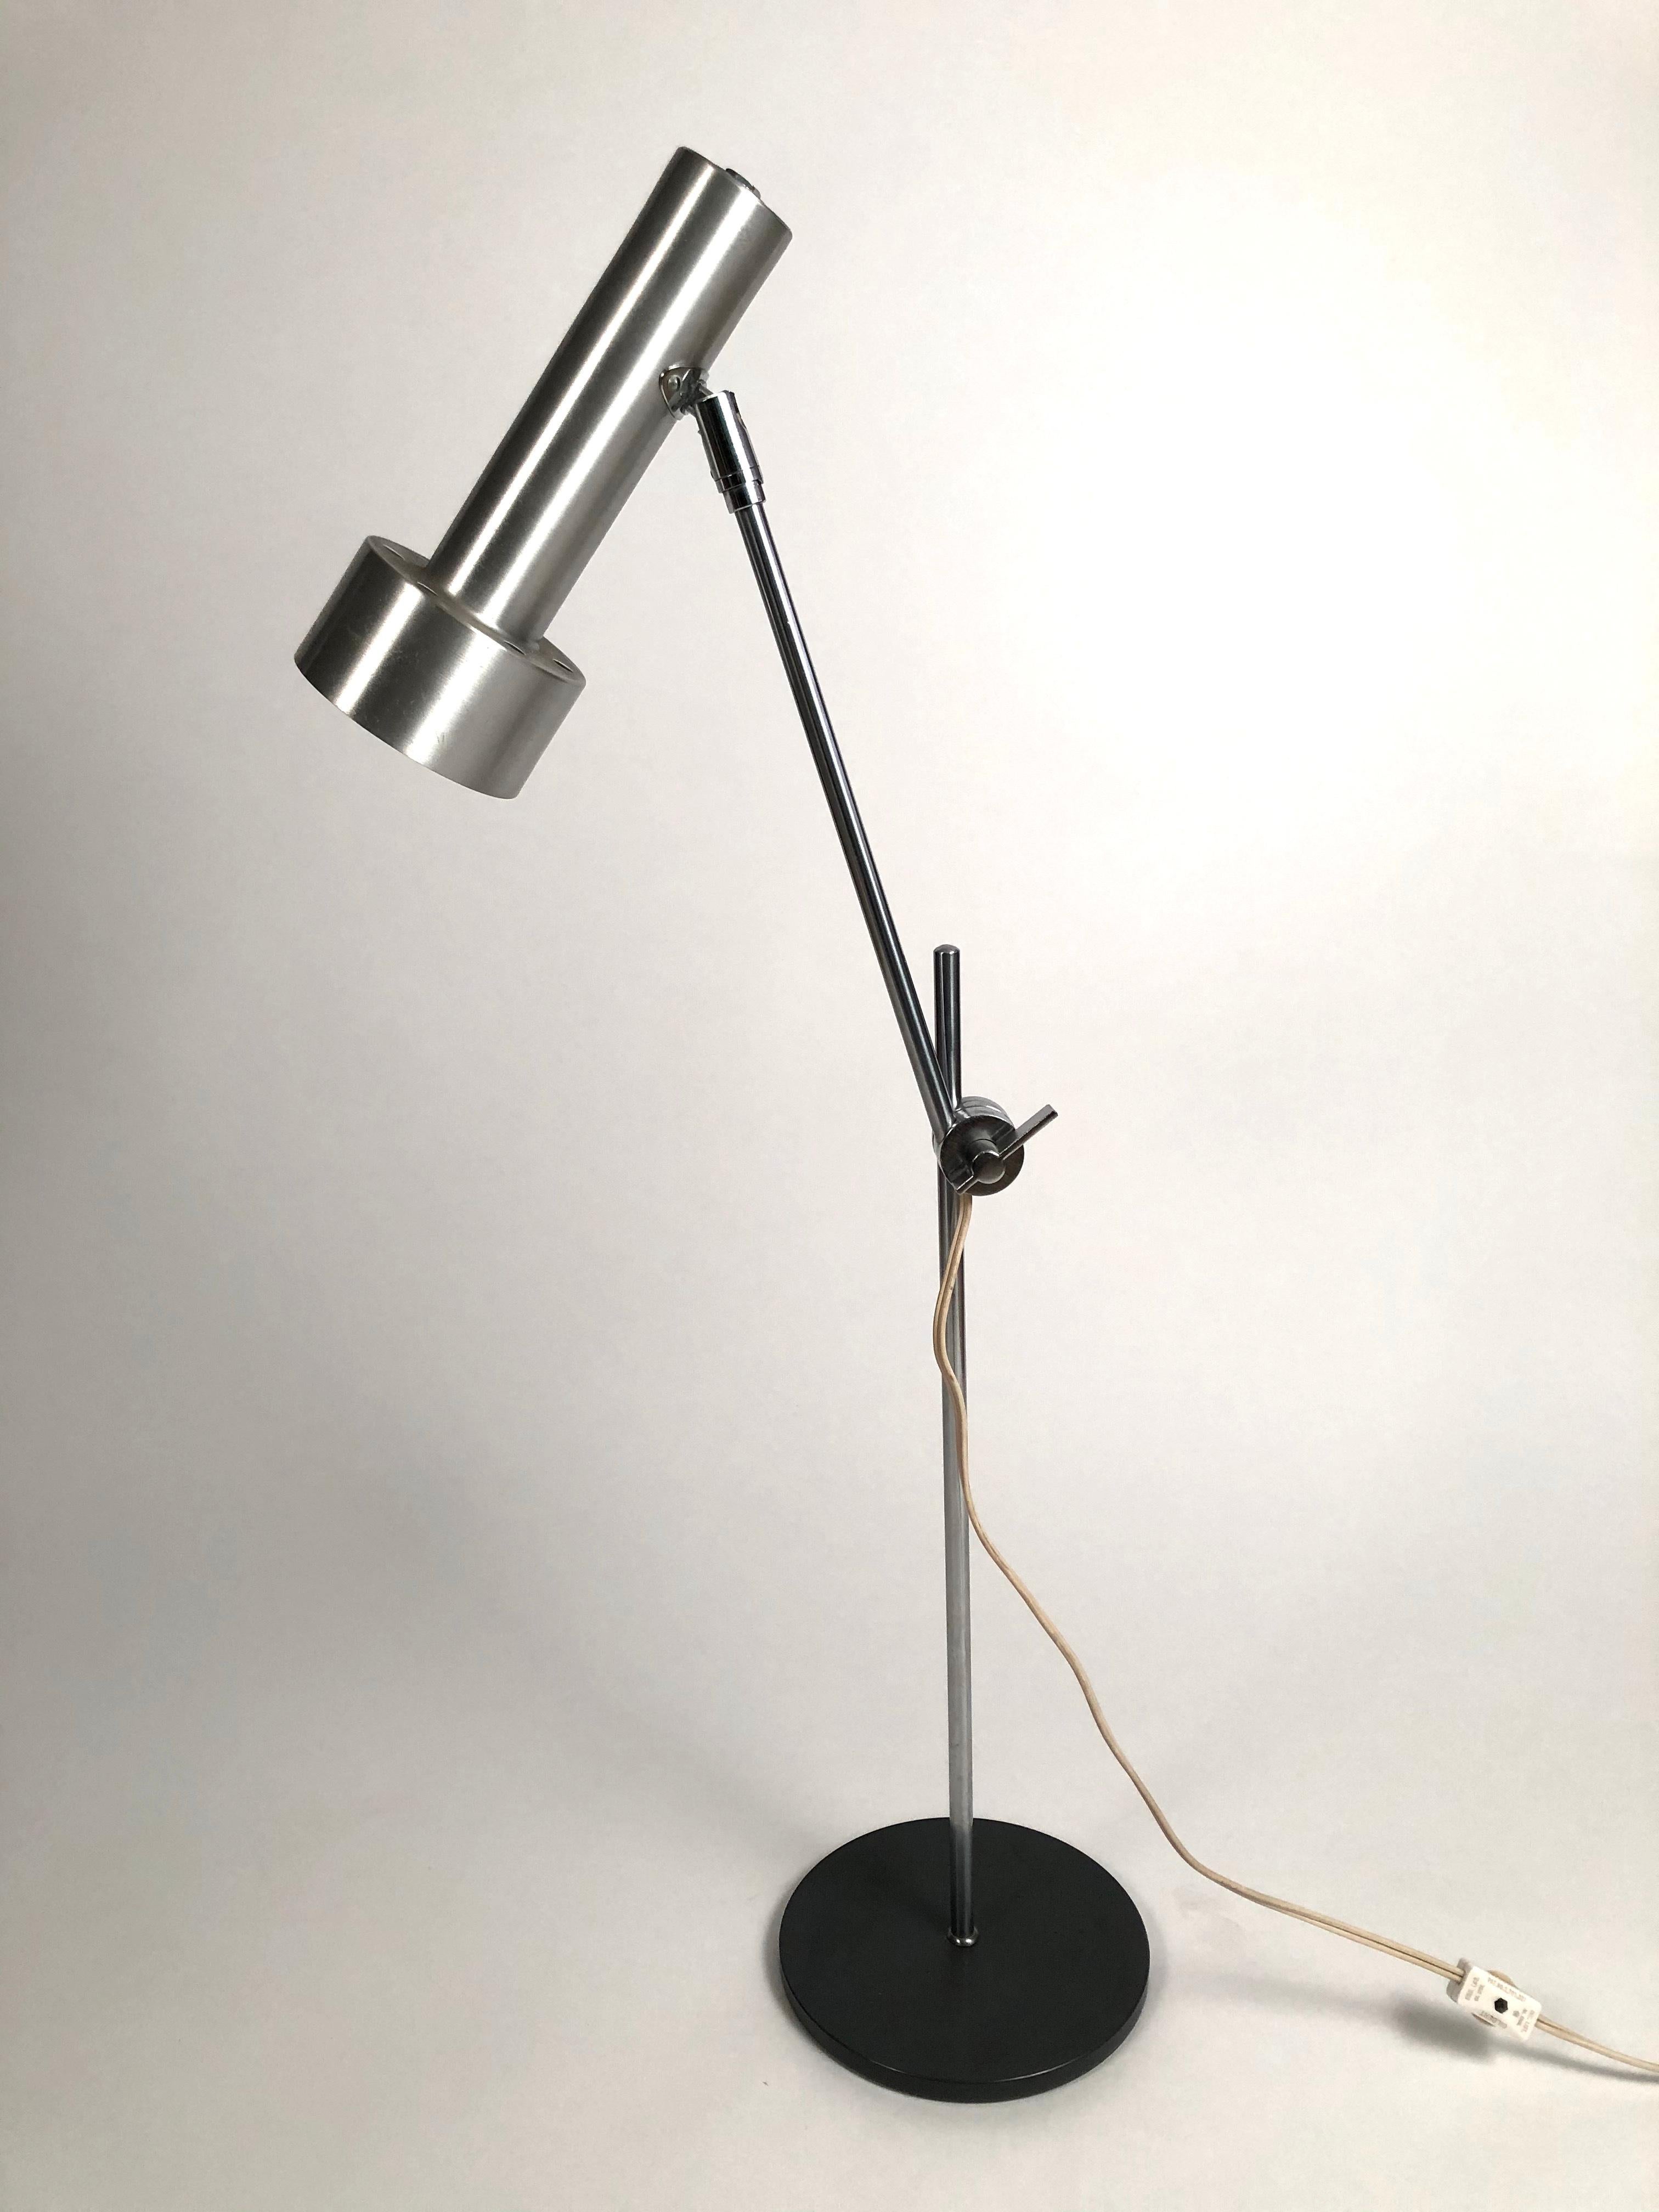 Brushed Swedish Steel Adjustable Height Desk Lamp, circa 1970s